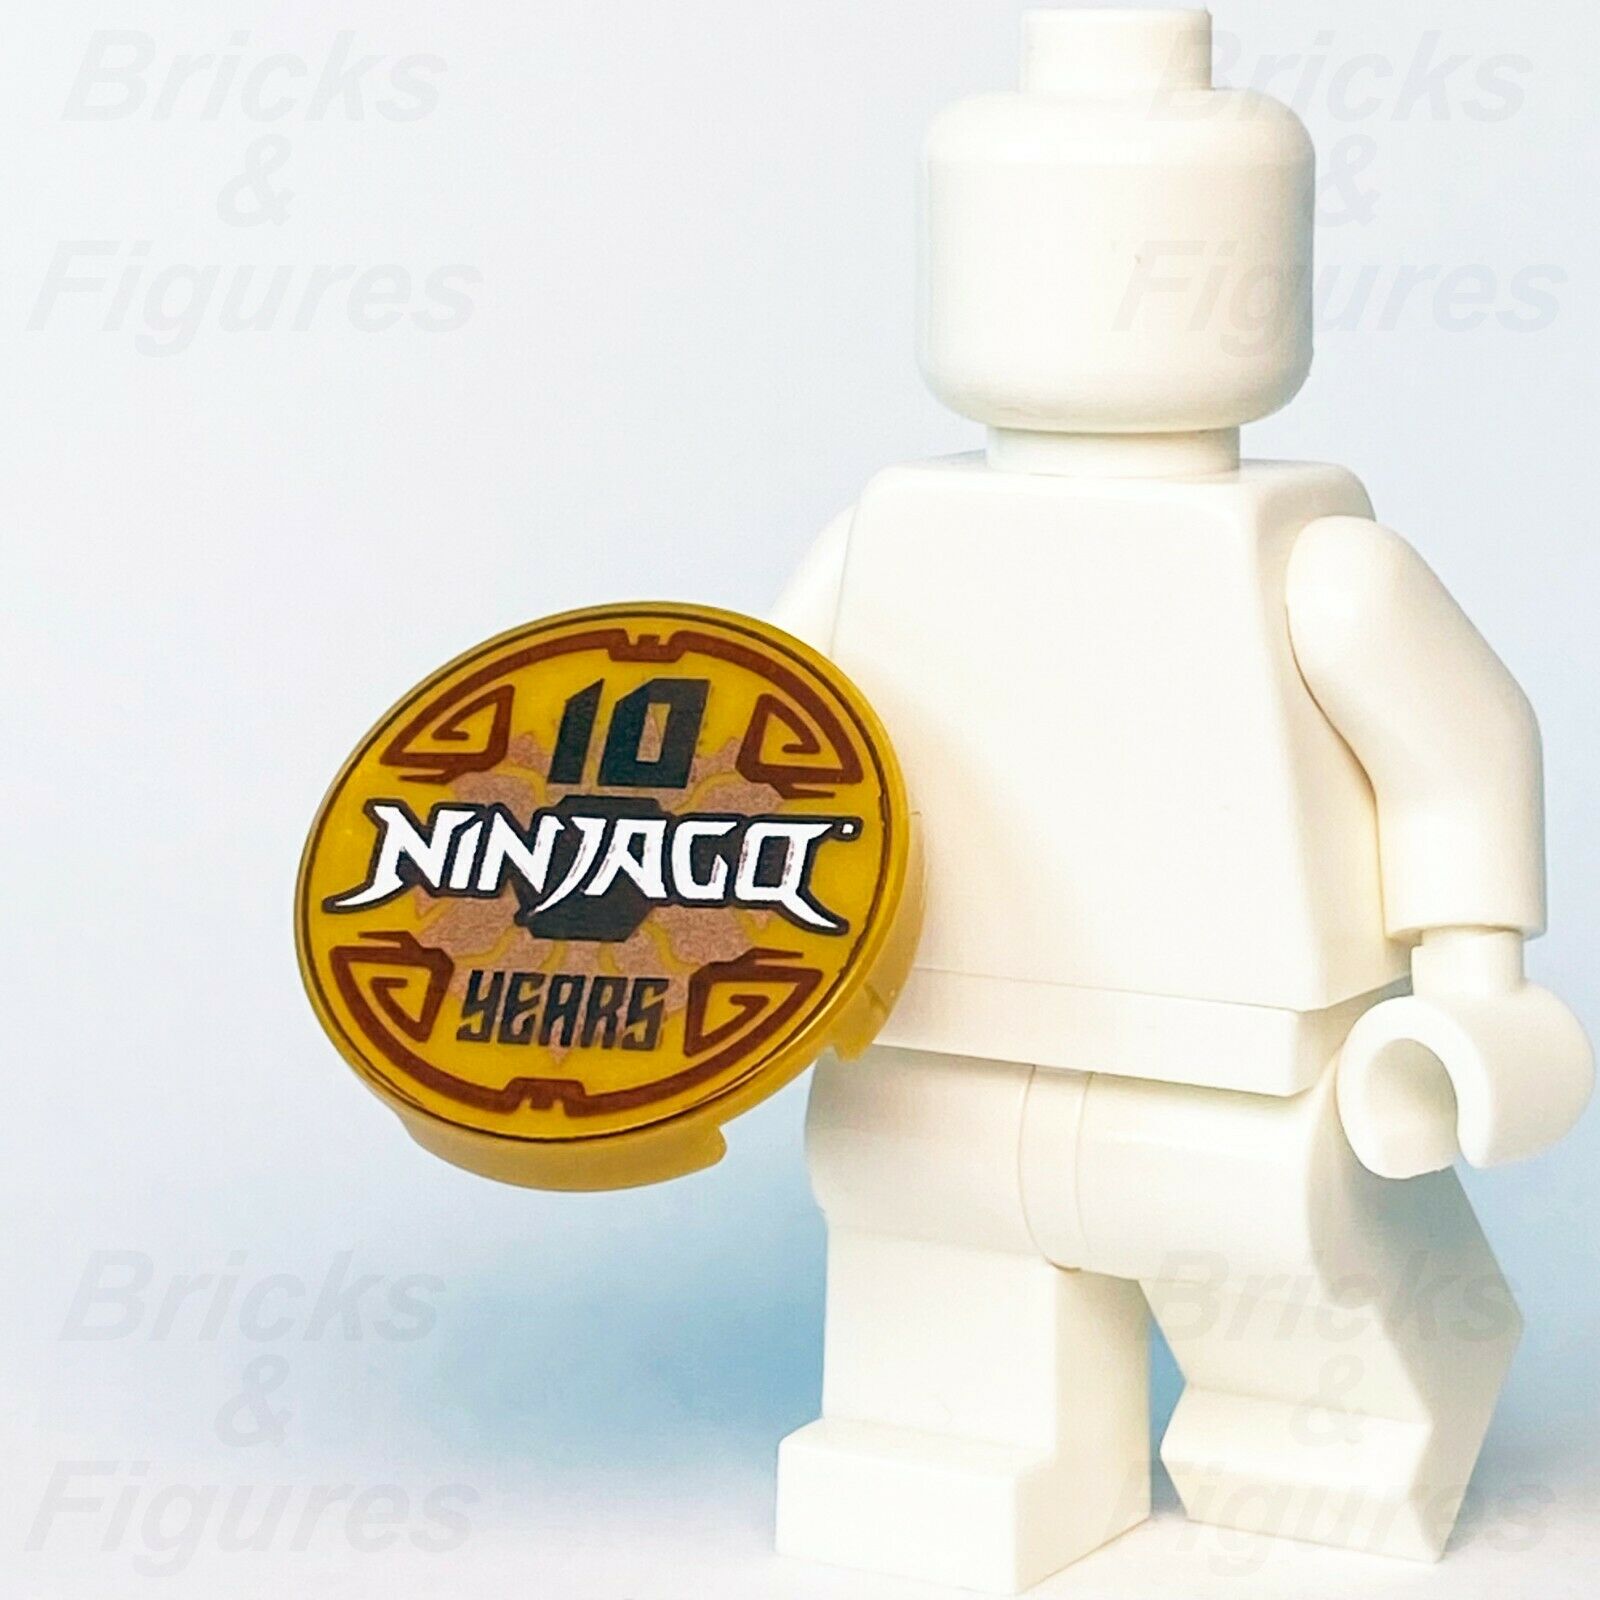 Ninjago LEGO "10 NINJAGO YEARS" Golden Tile Part 71736 71741 71735 71737 71738 - Bricks & Figures